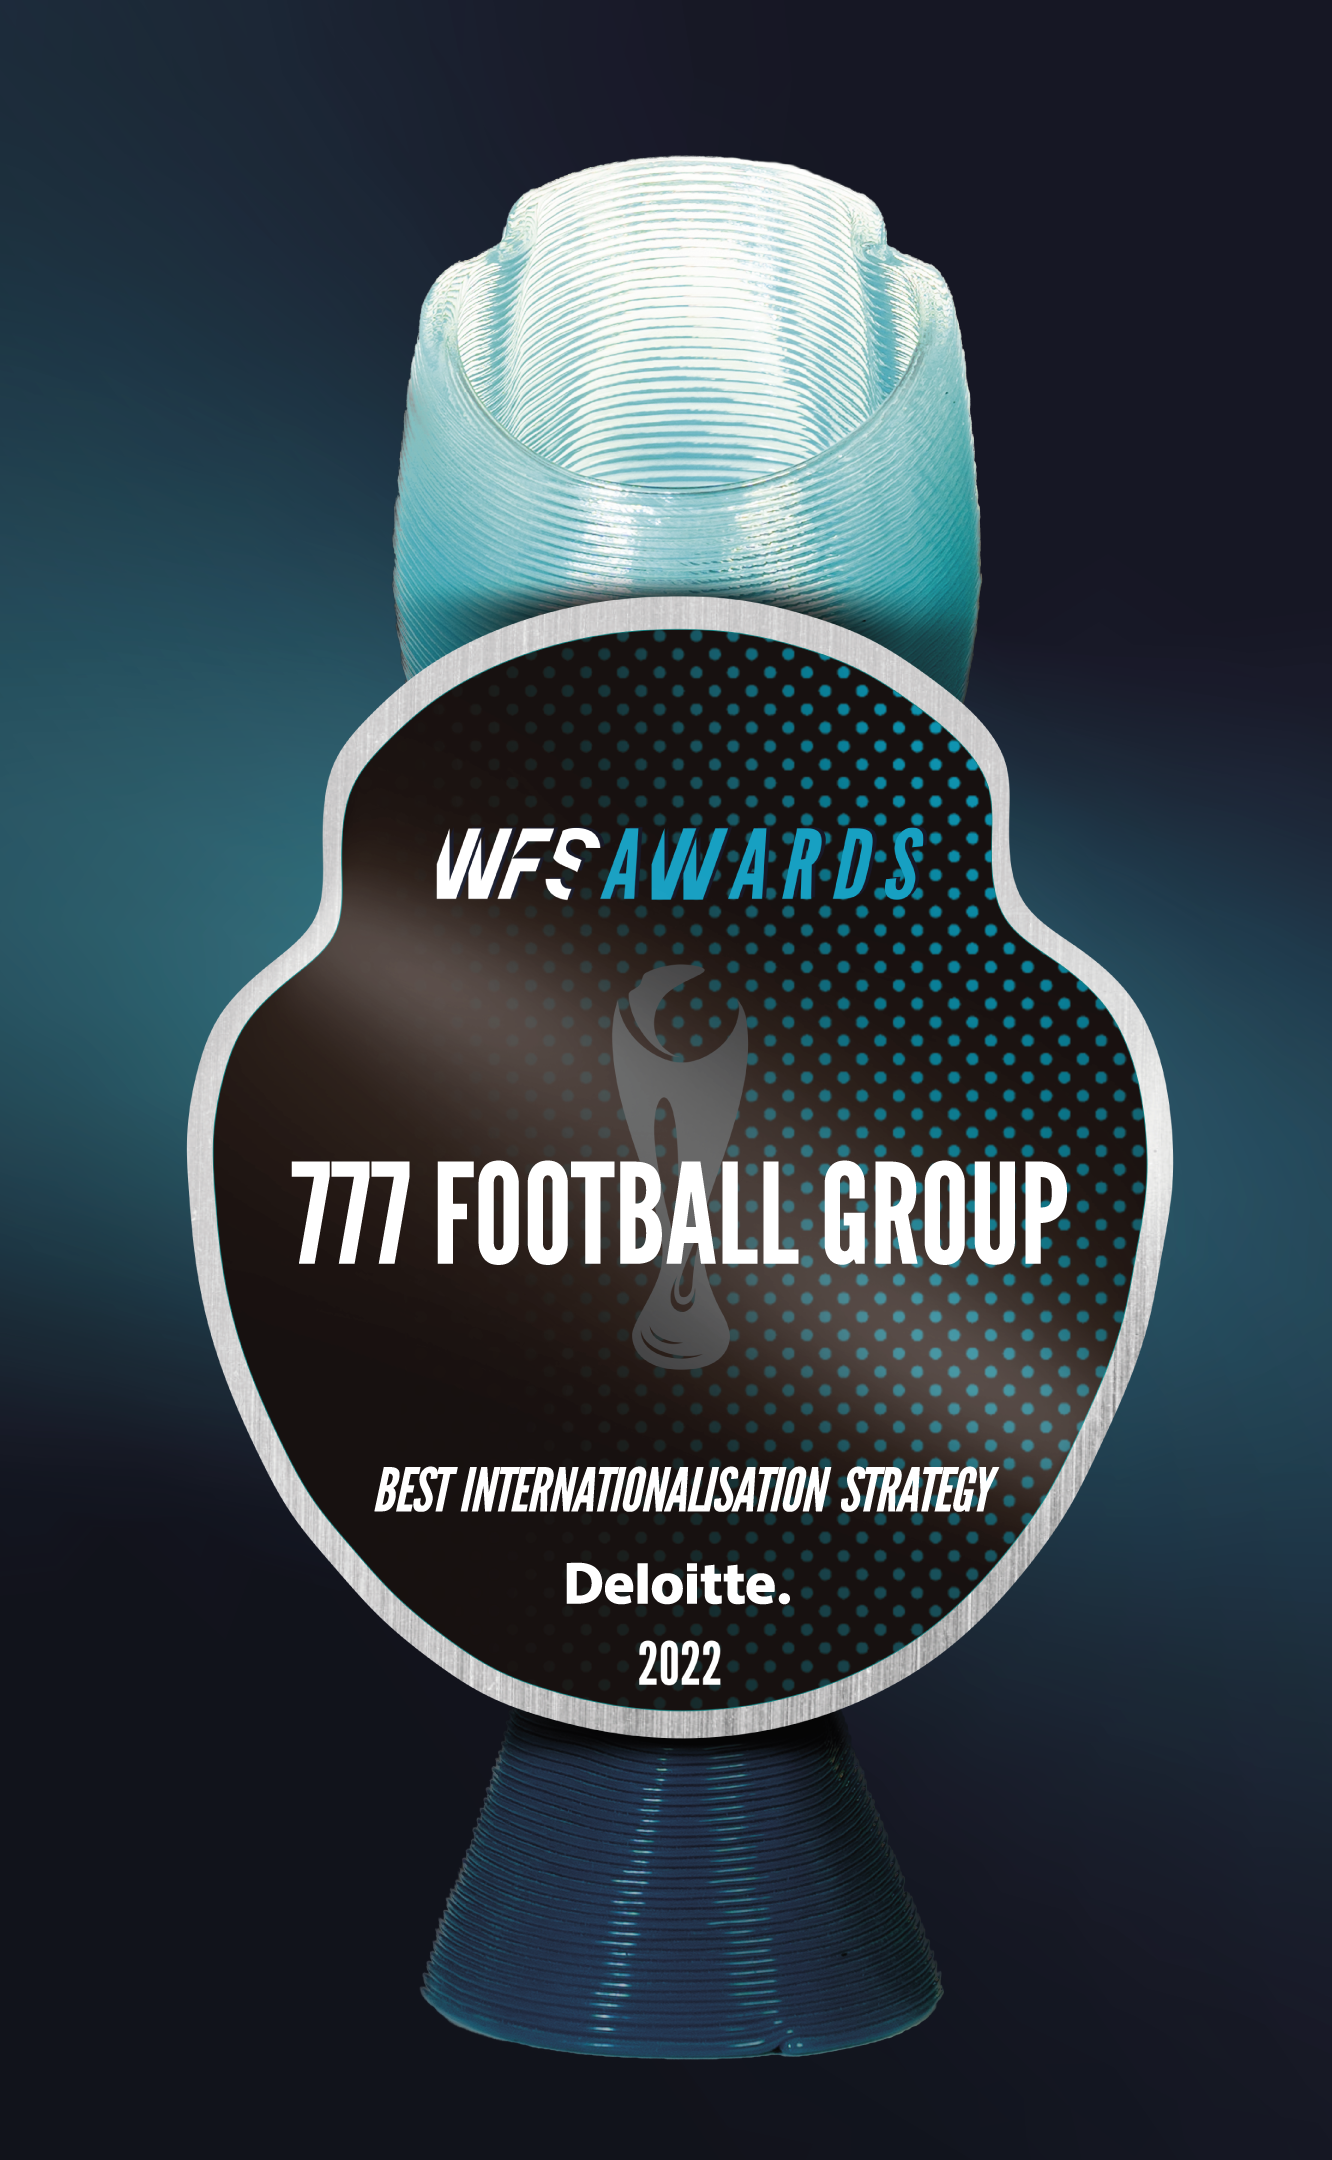 WFS Awards 777 Football Group